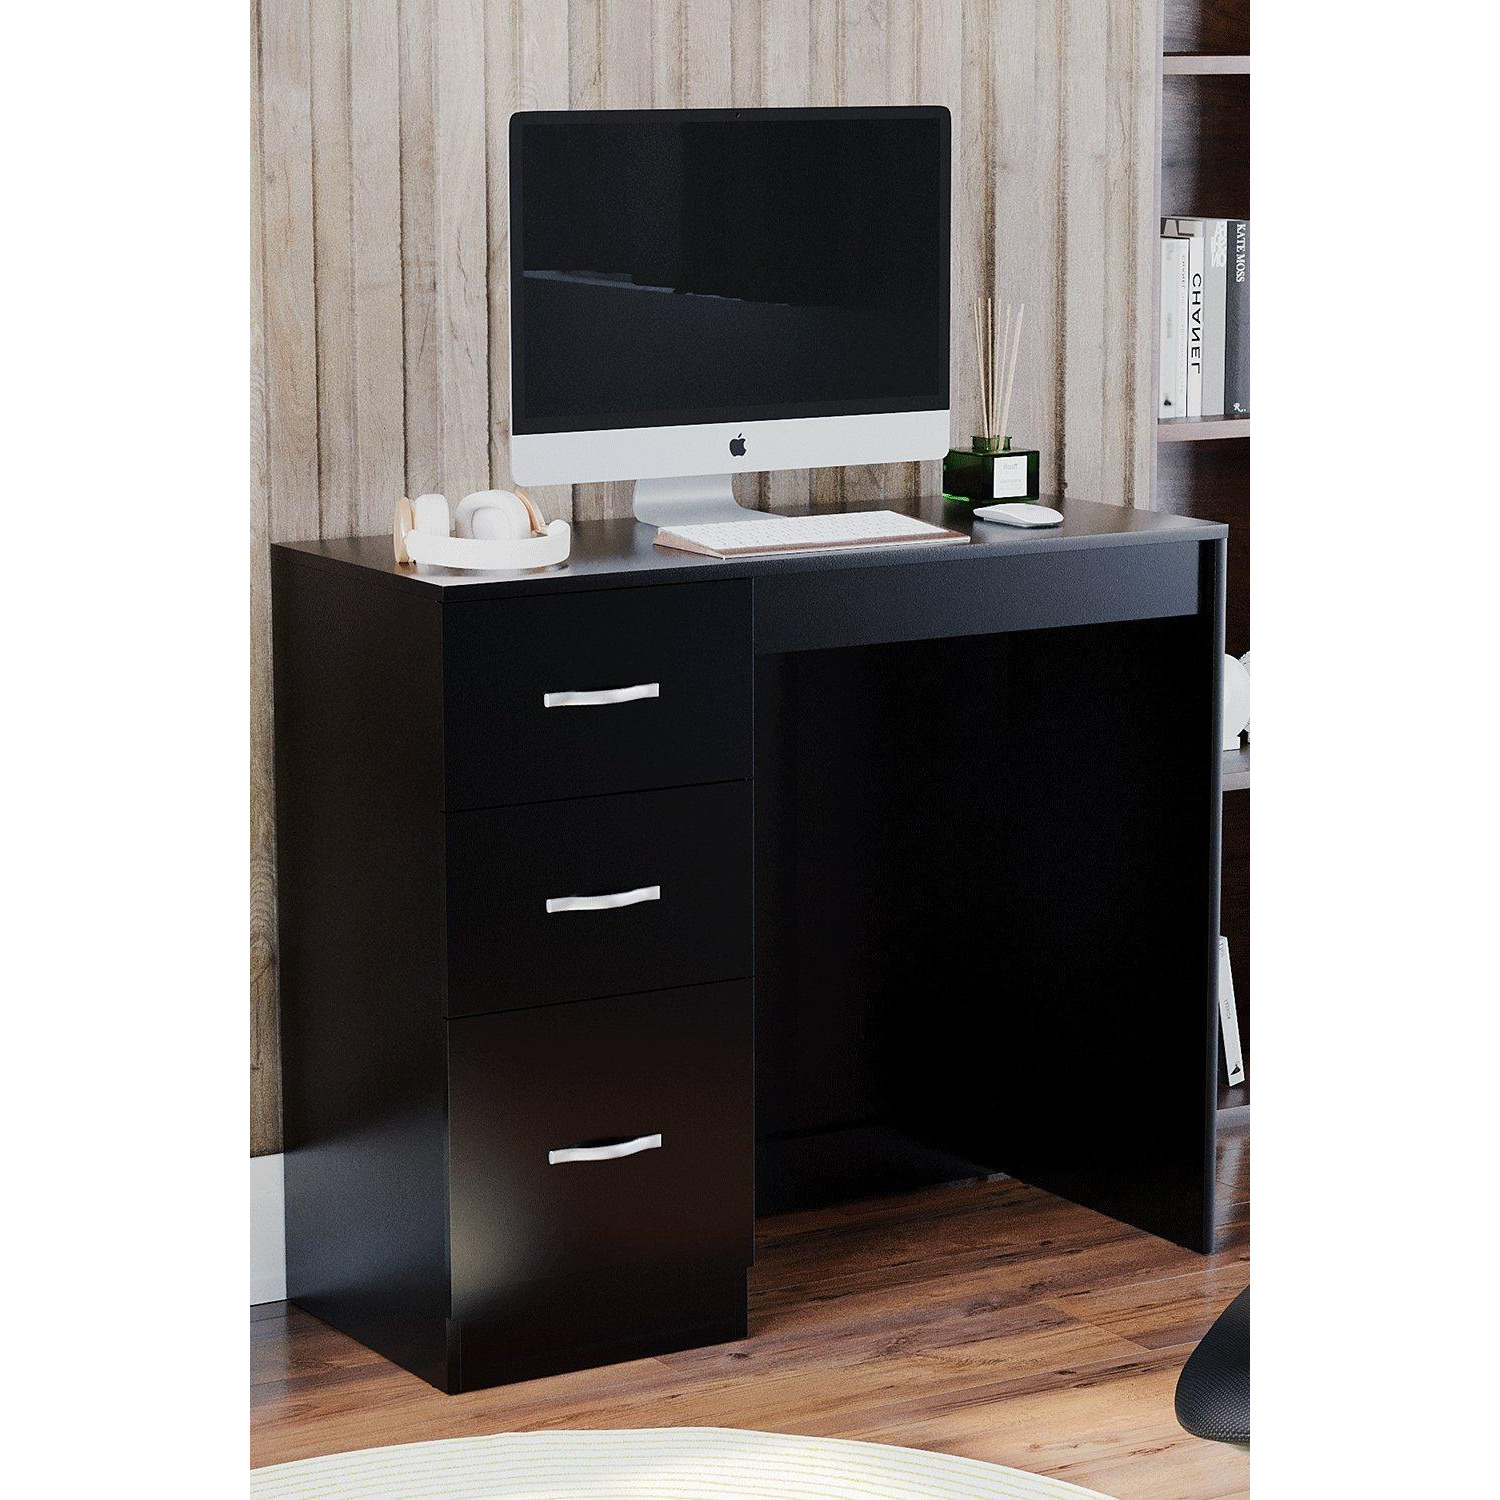 Vida Designs Riano Dressing Table MDF 790 x 930 x 380 mm - image 1